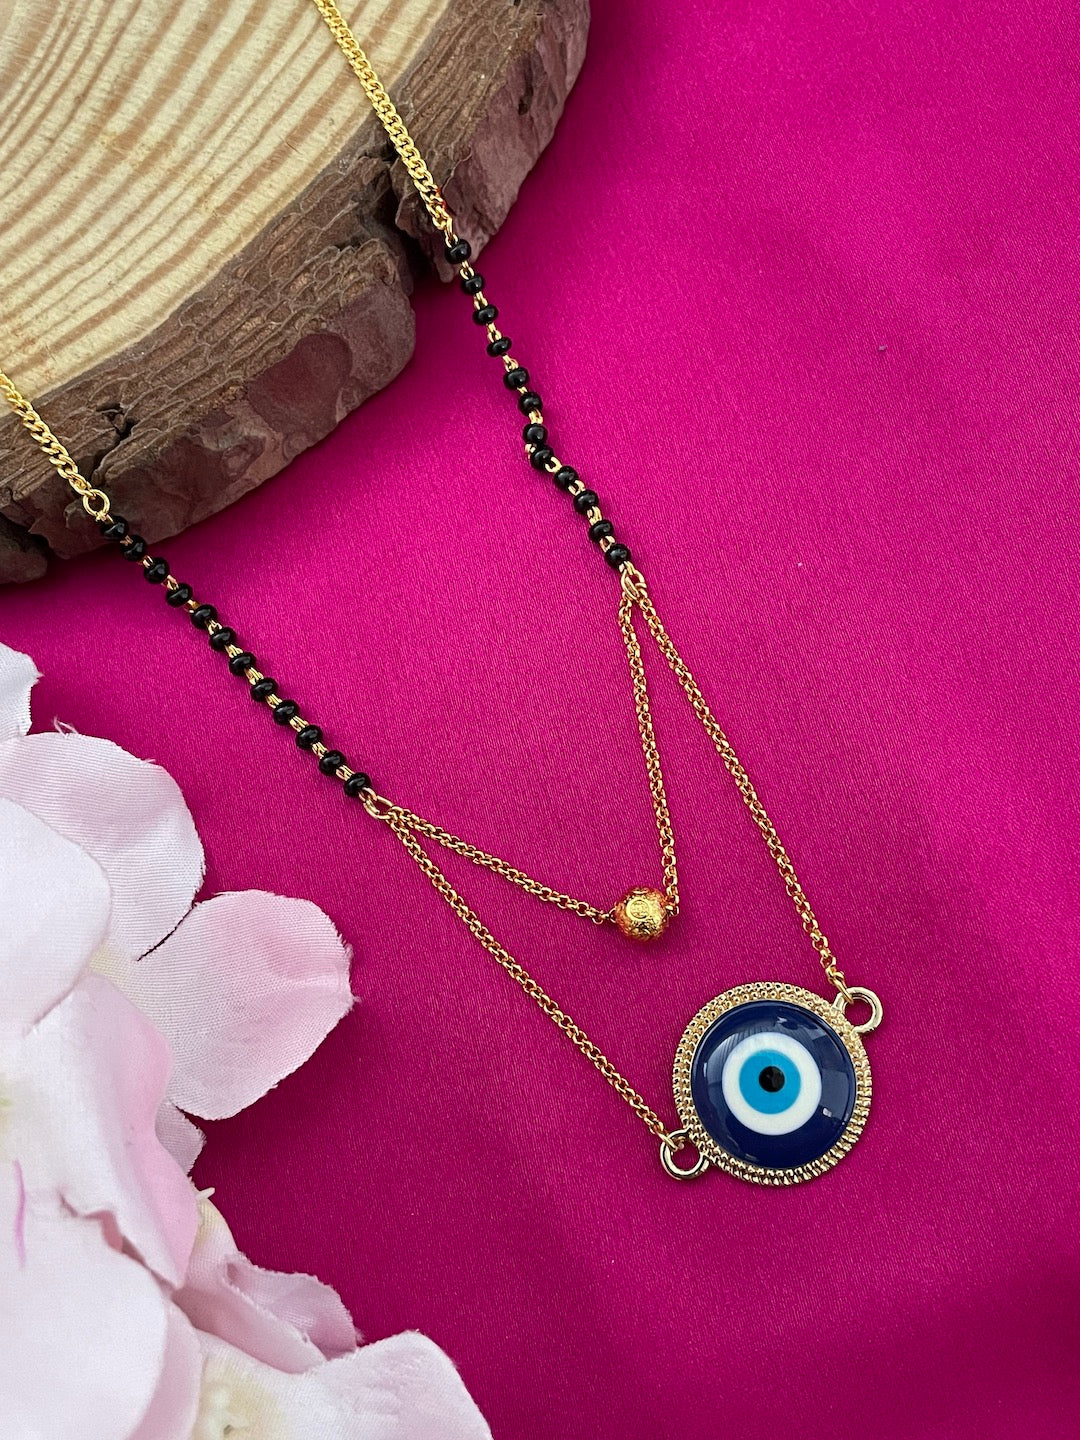 image for Simple Modern Short Mangalsutra Designs Evil Eye Layered Pendant Black Beads Gold Chain